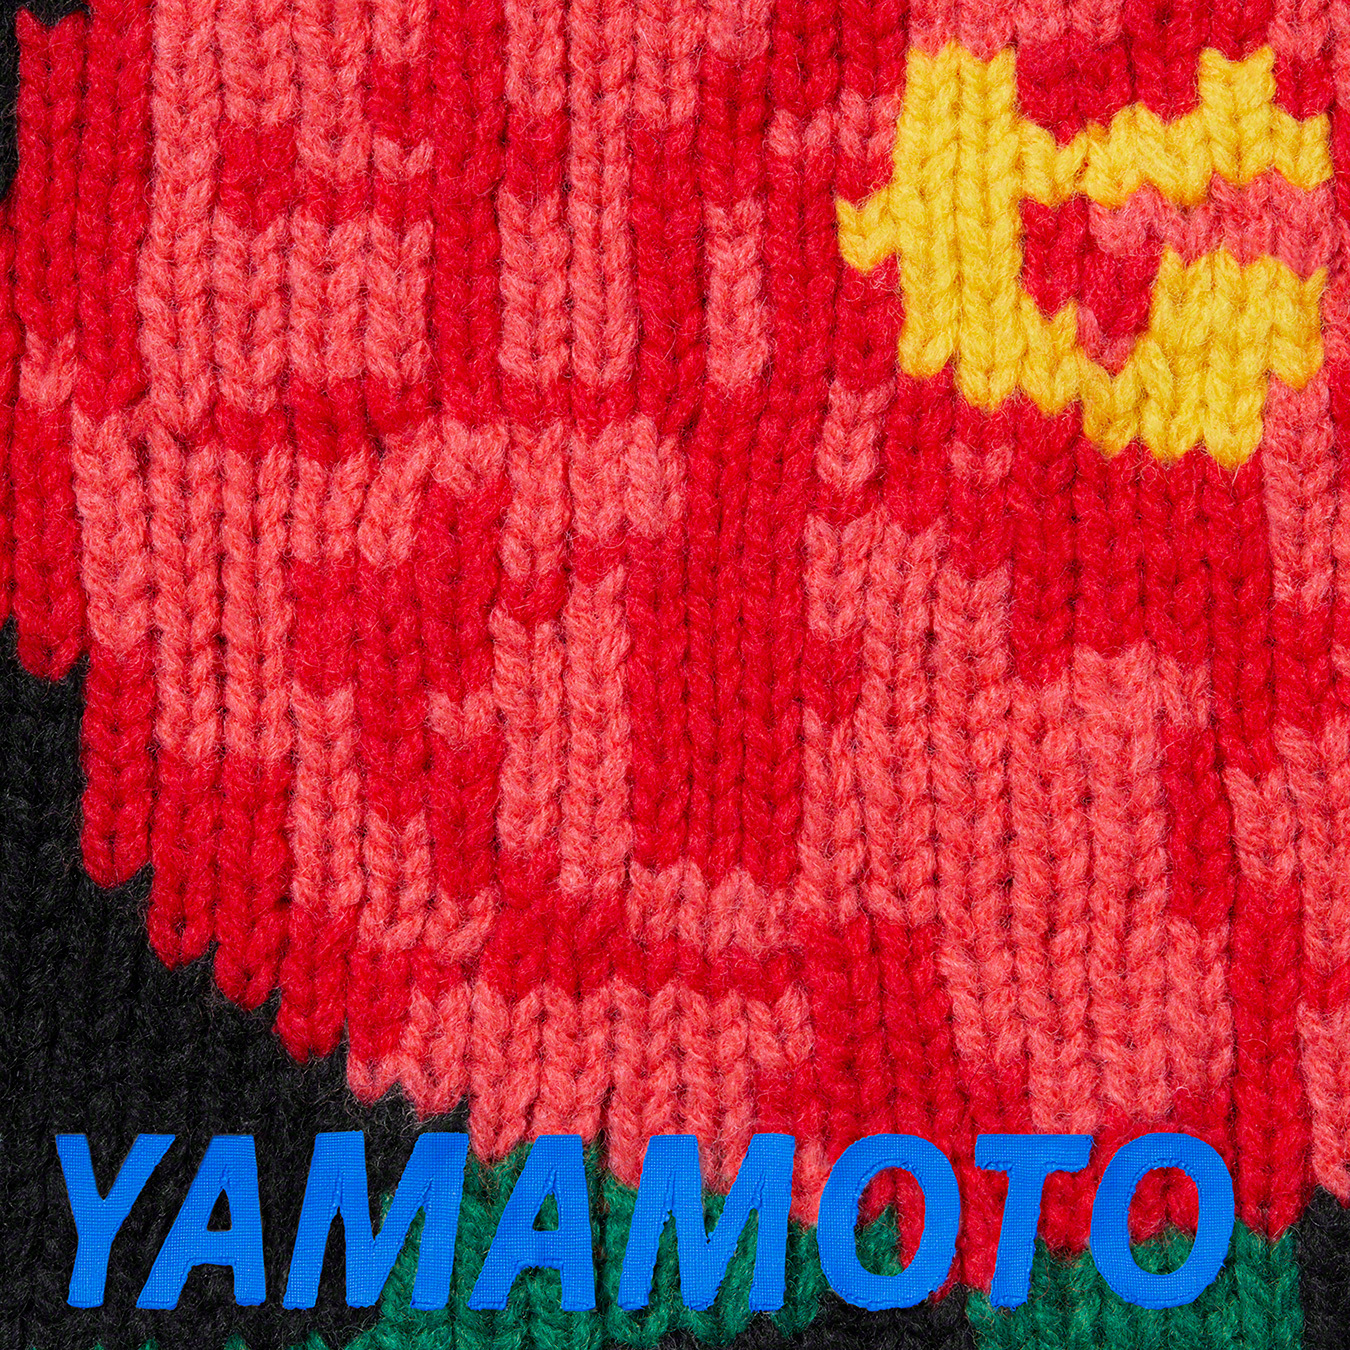 Supreme®/Yohji Yamamoto® Sweater - Supreme Community